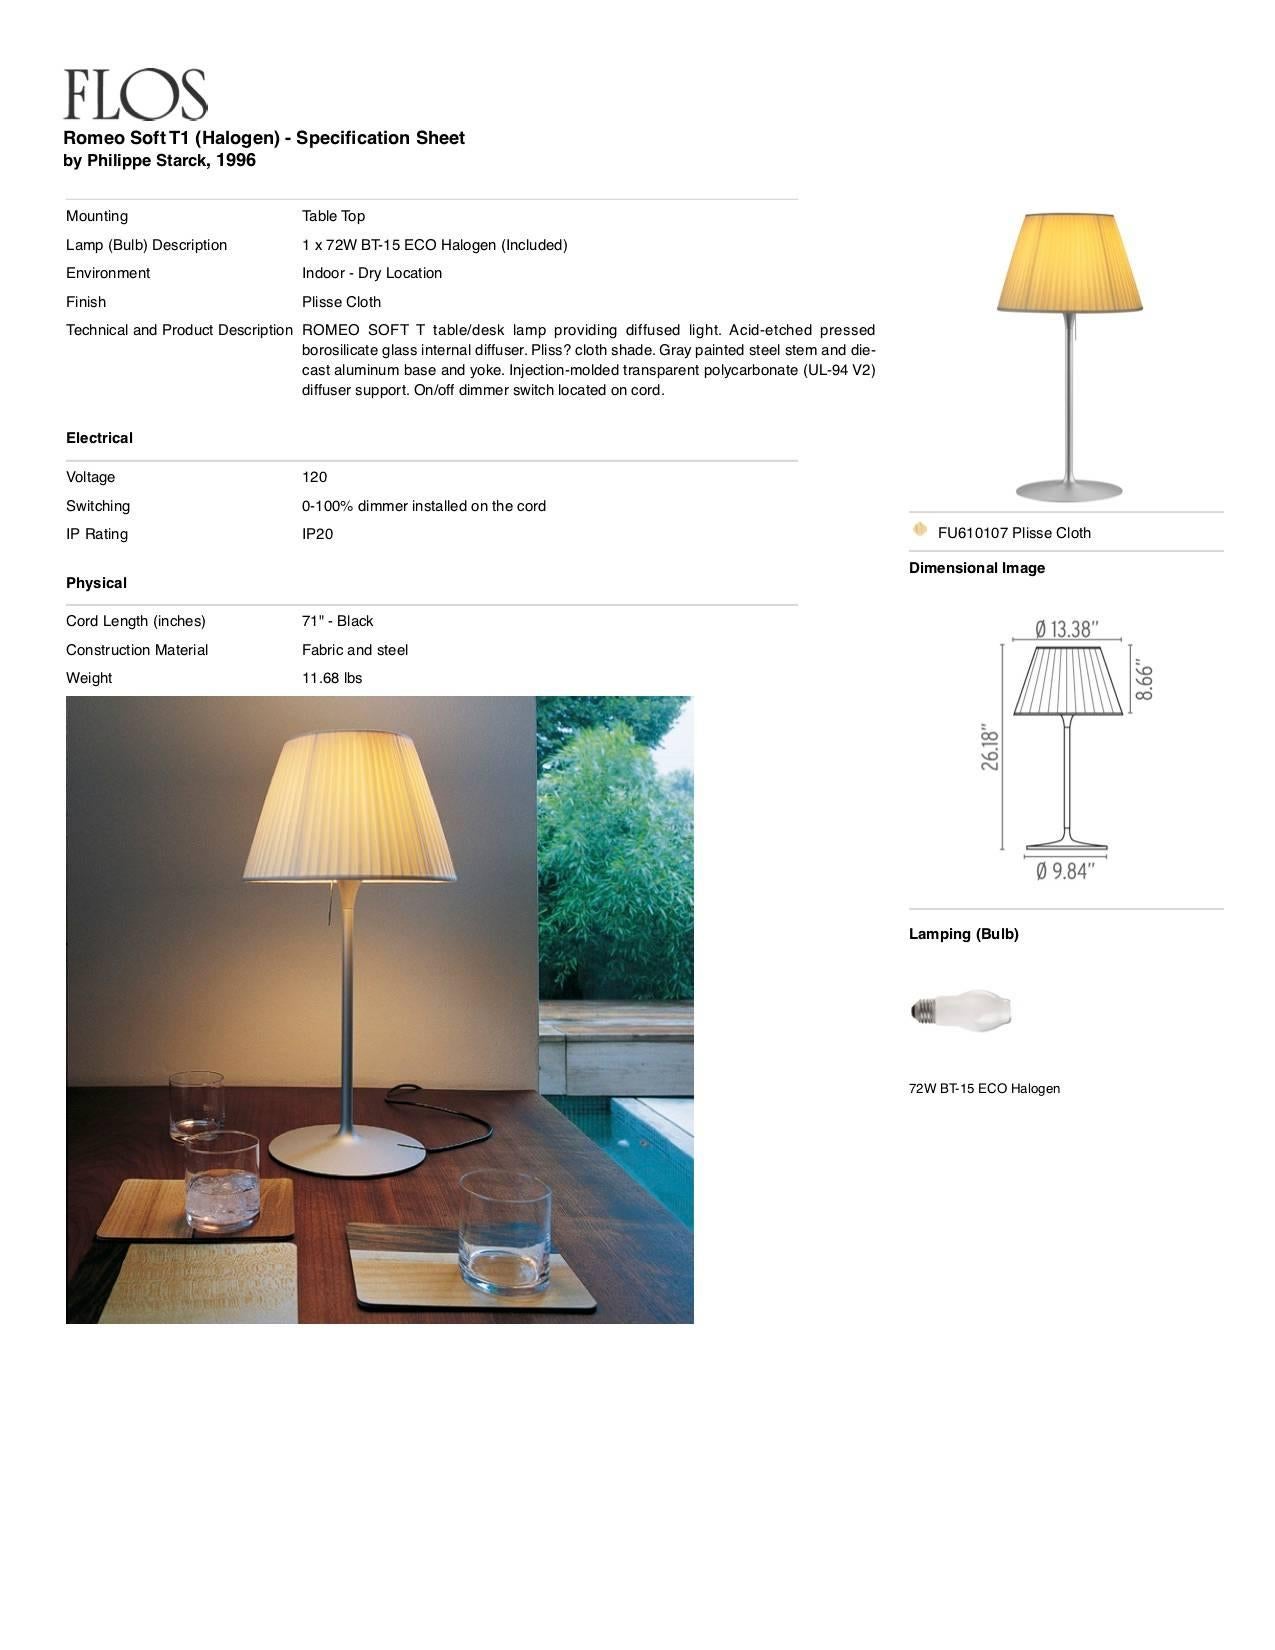 FLOS Romeo Soft T1 lampe de bureau halogène par Philippe Starck Neuf - En vente à Brooklyn, NY